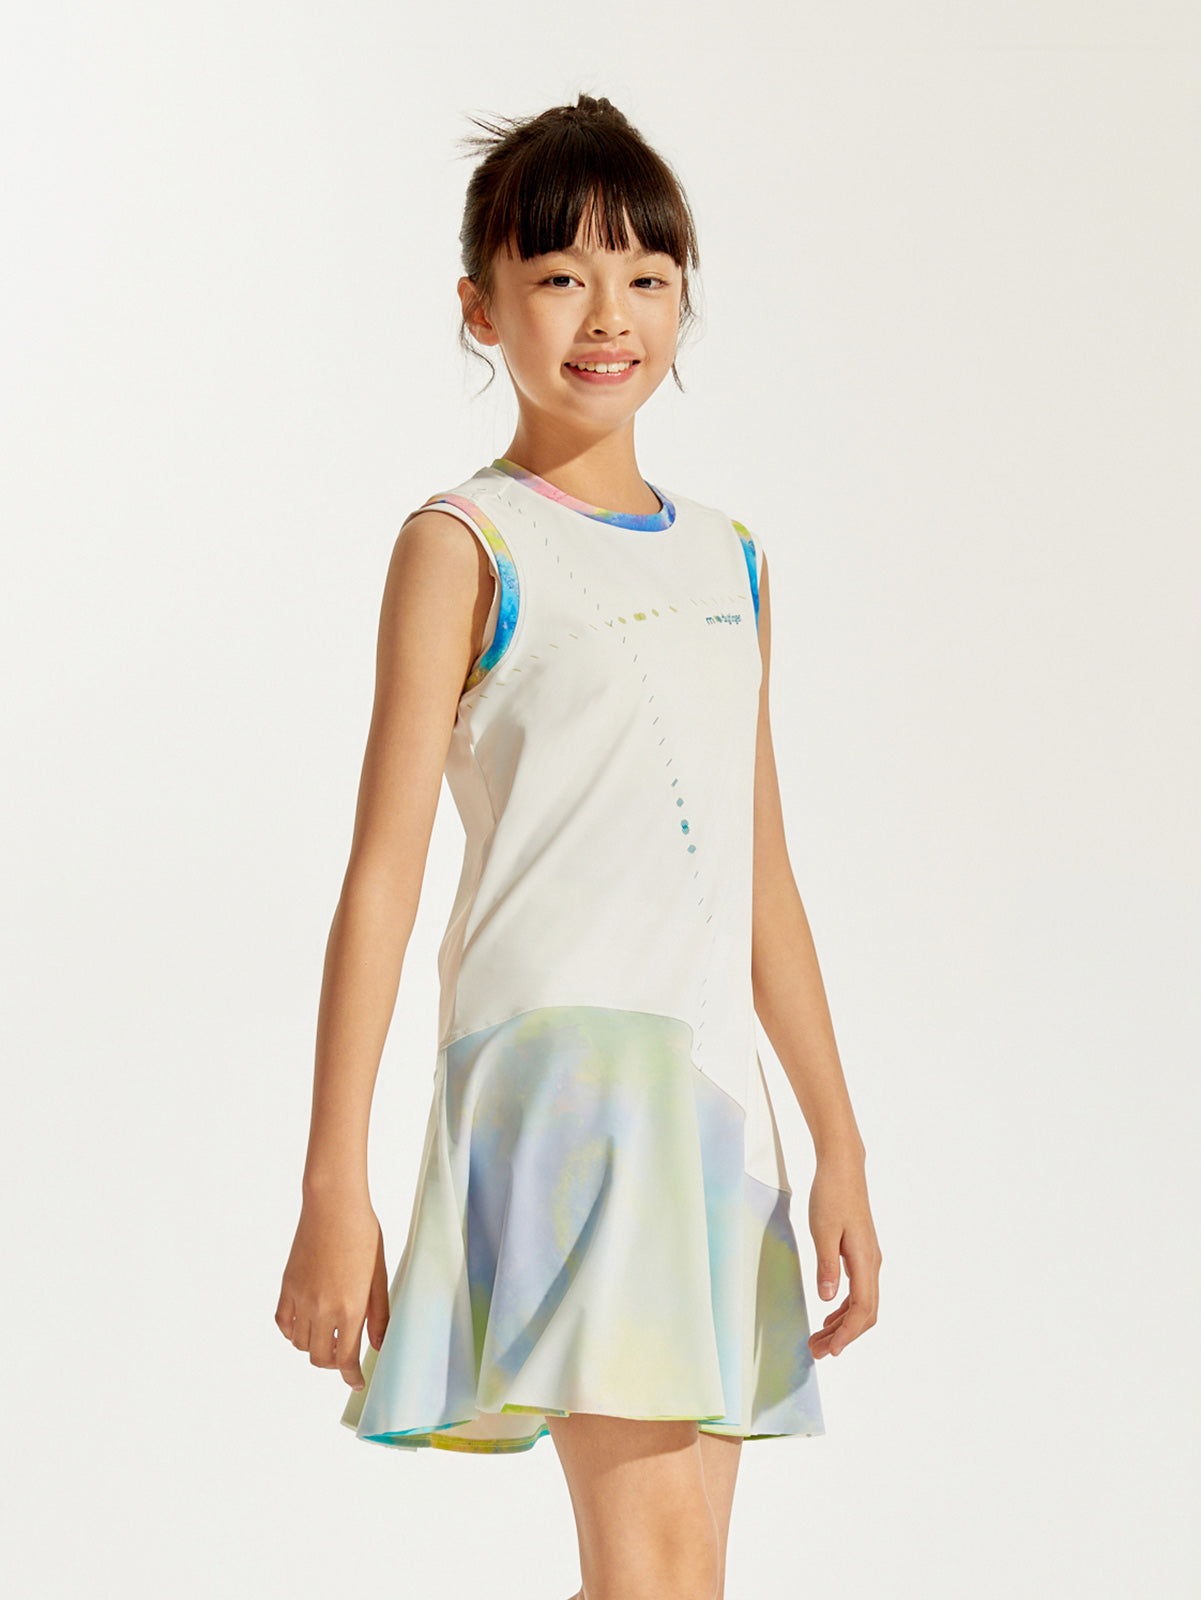 Orbit Sleeveless Tennis Dress